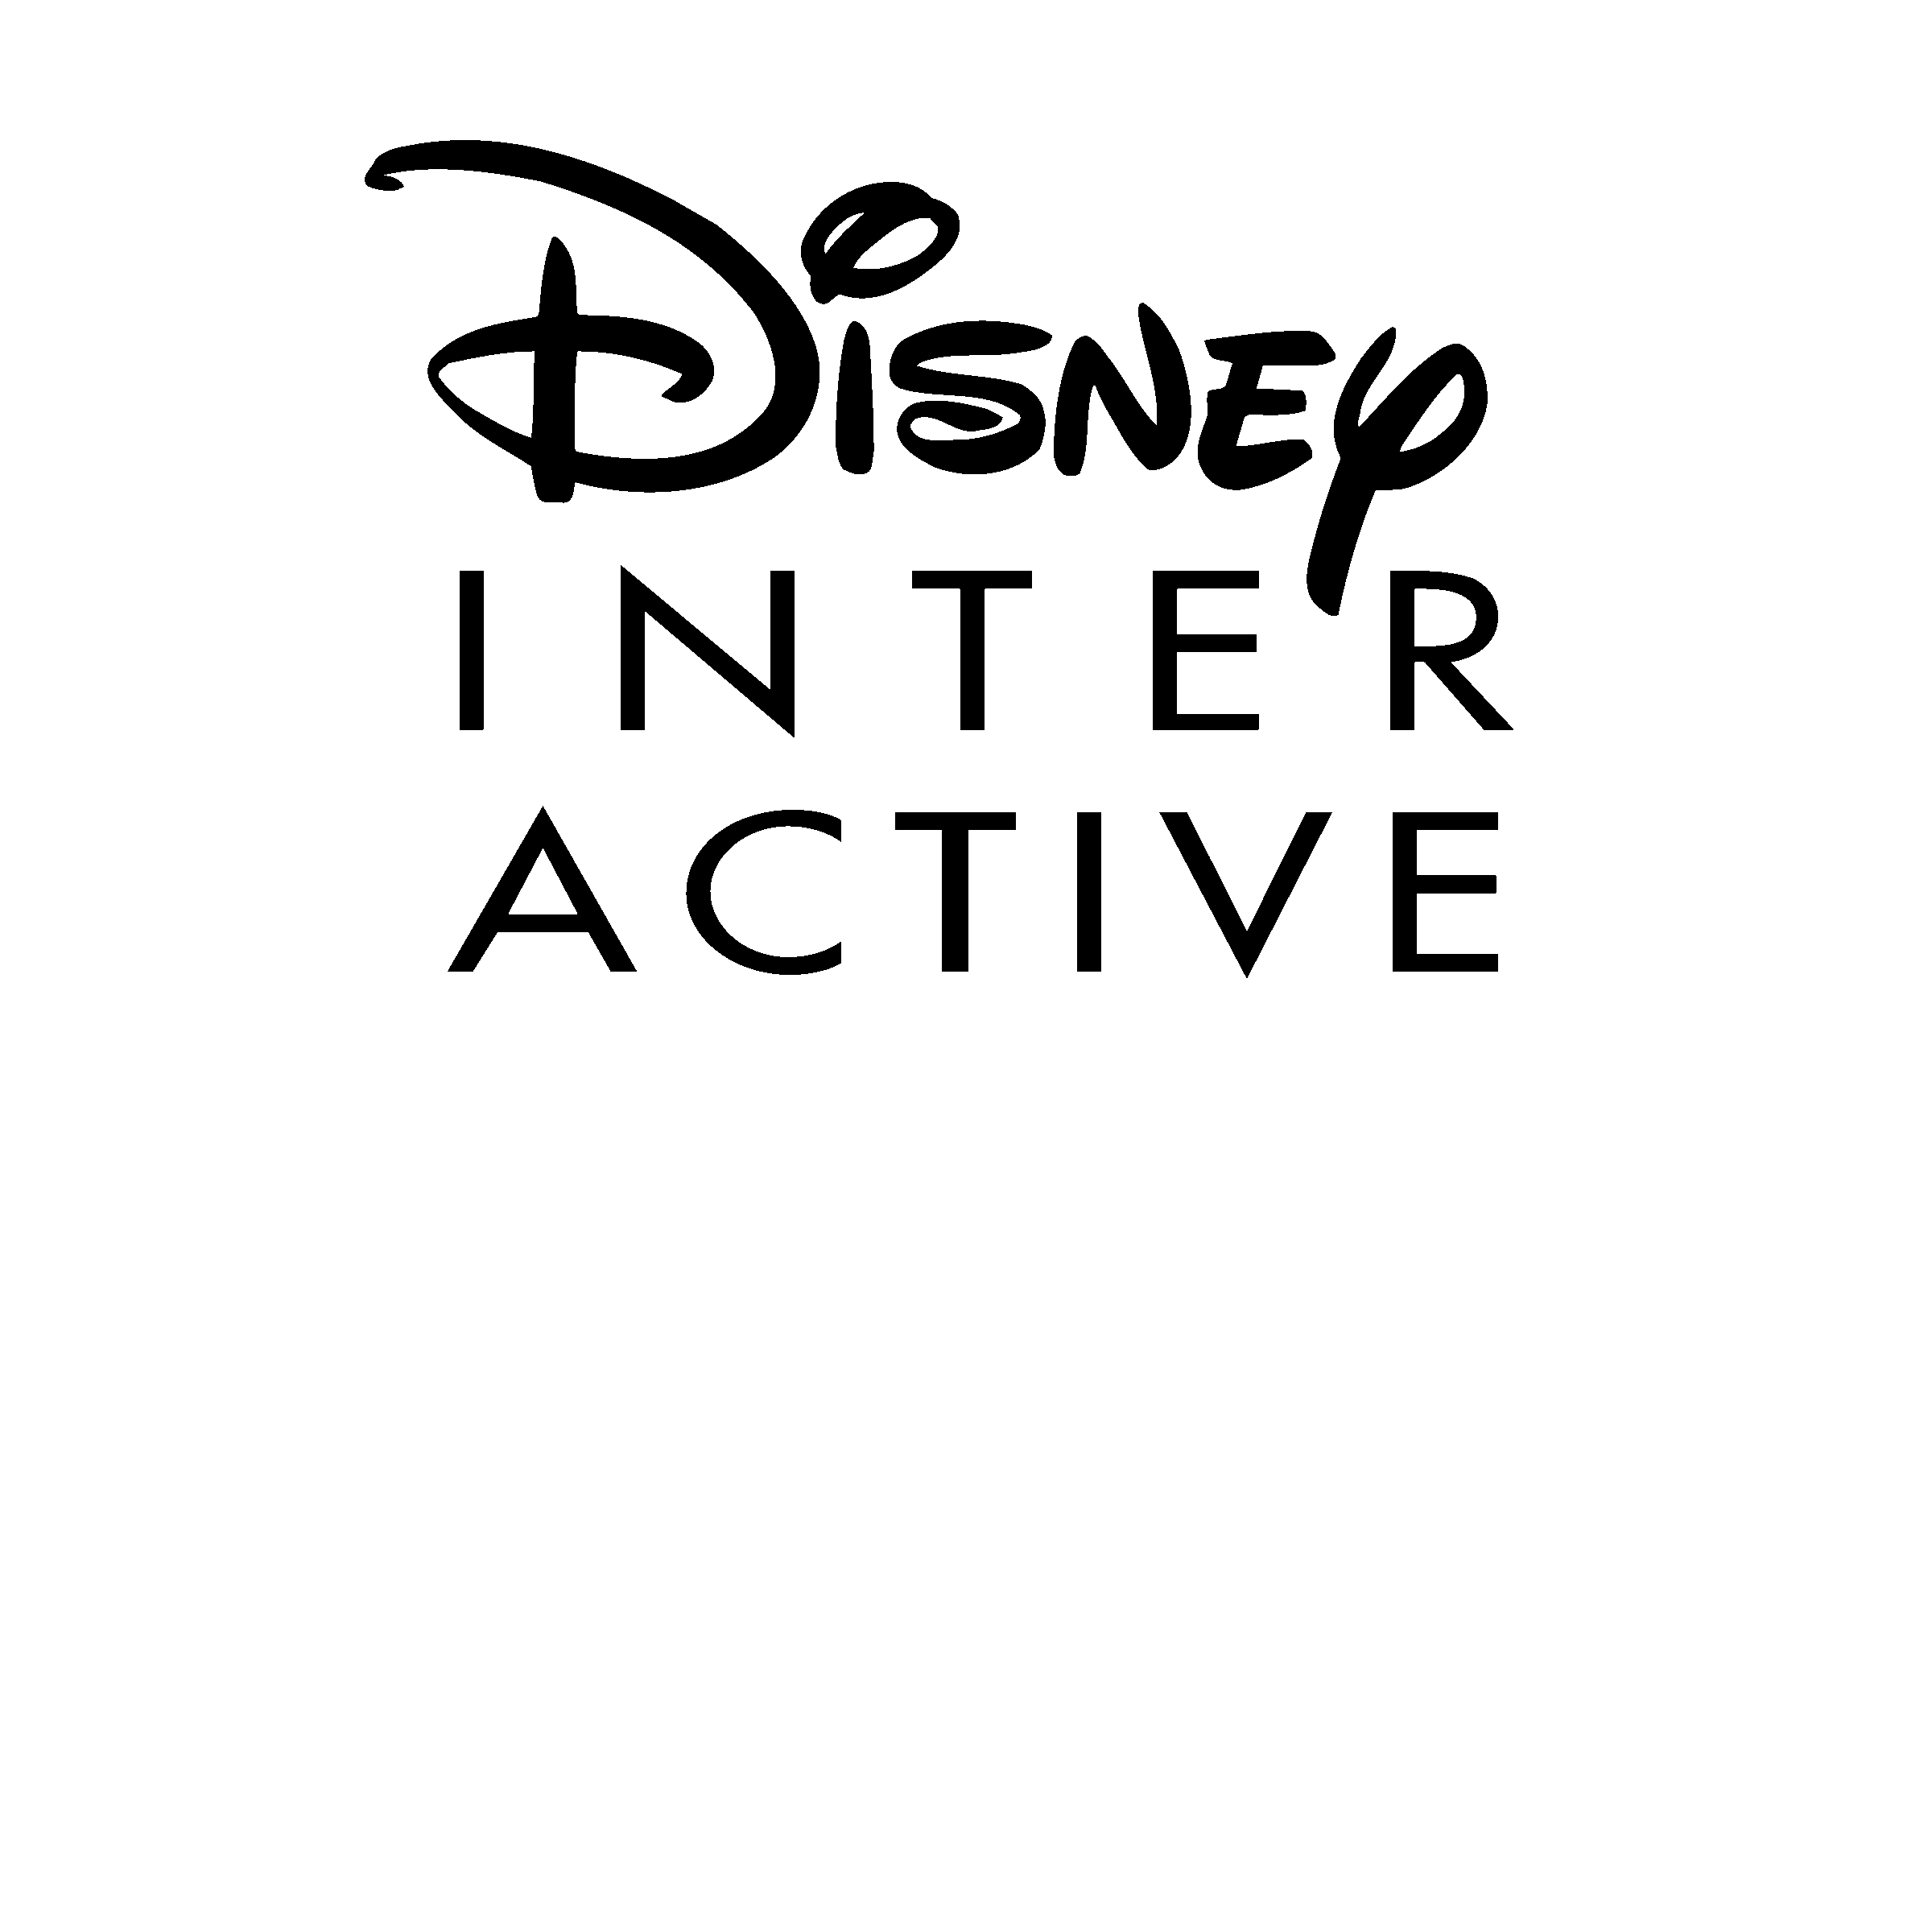 Disney Interactive Logo - Disney Interactive Logo PNG Transparent & SVG Vector